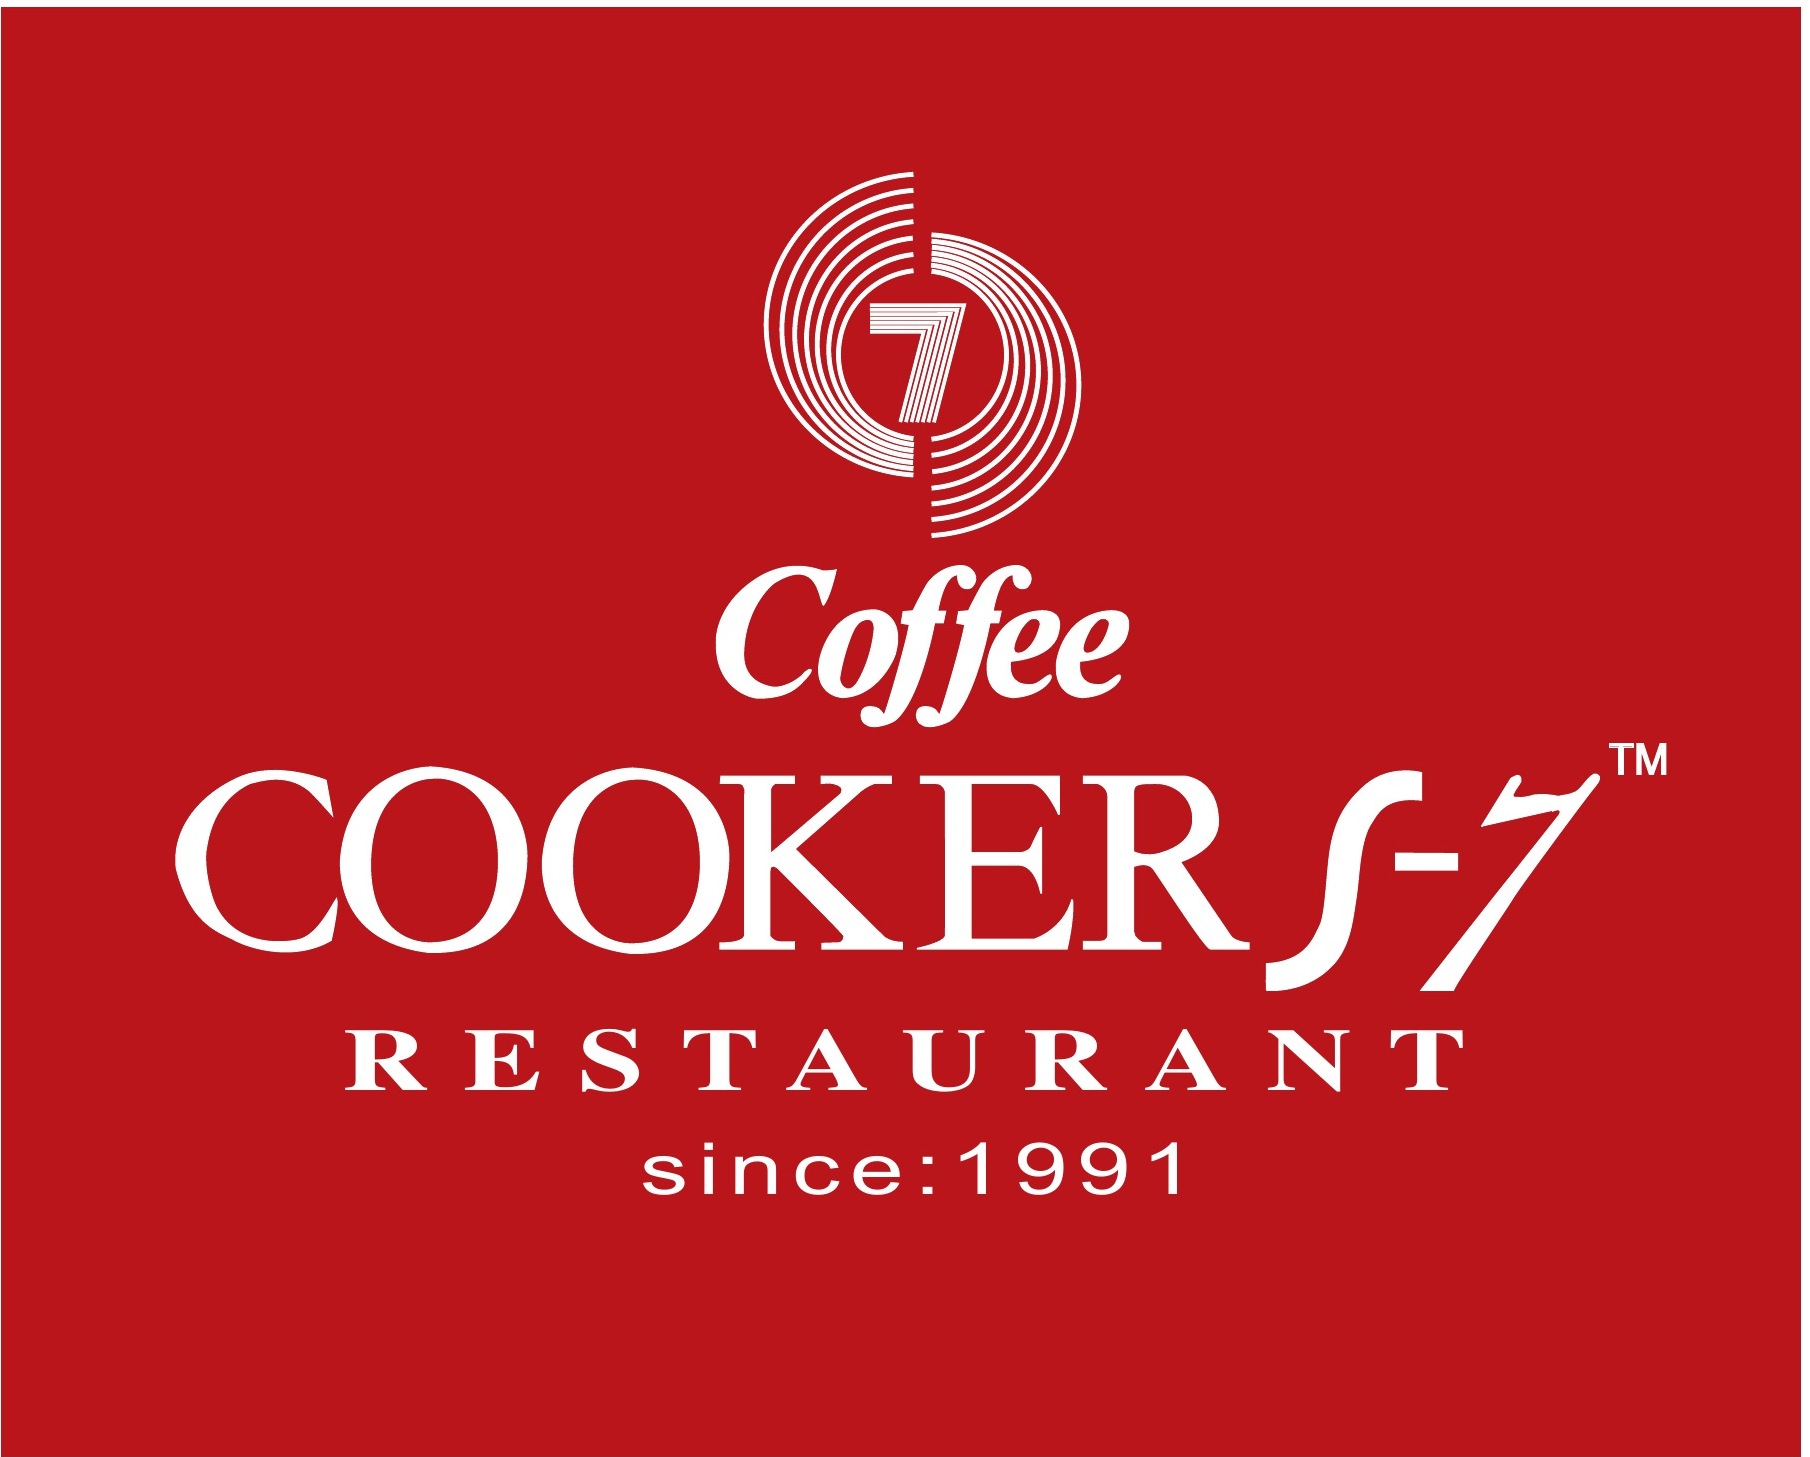 Coffee Cookers 7 Restaurant